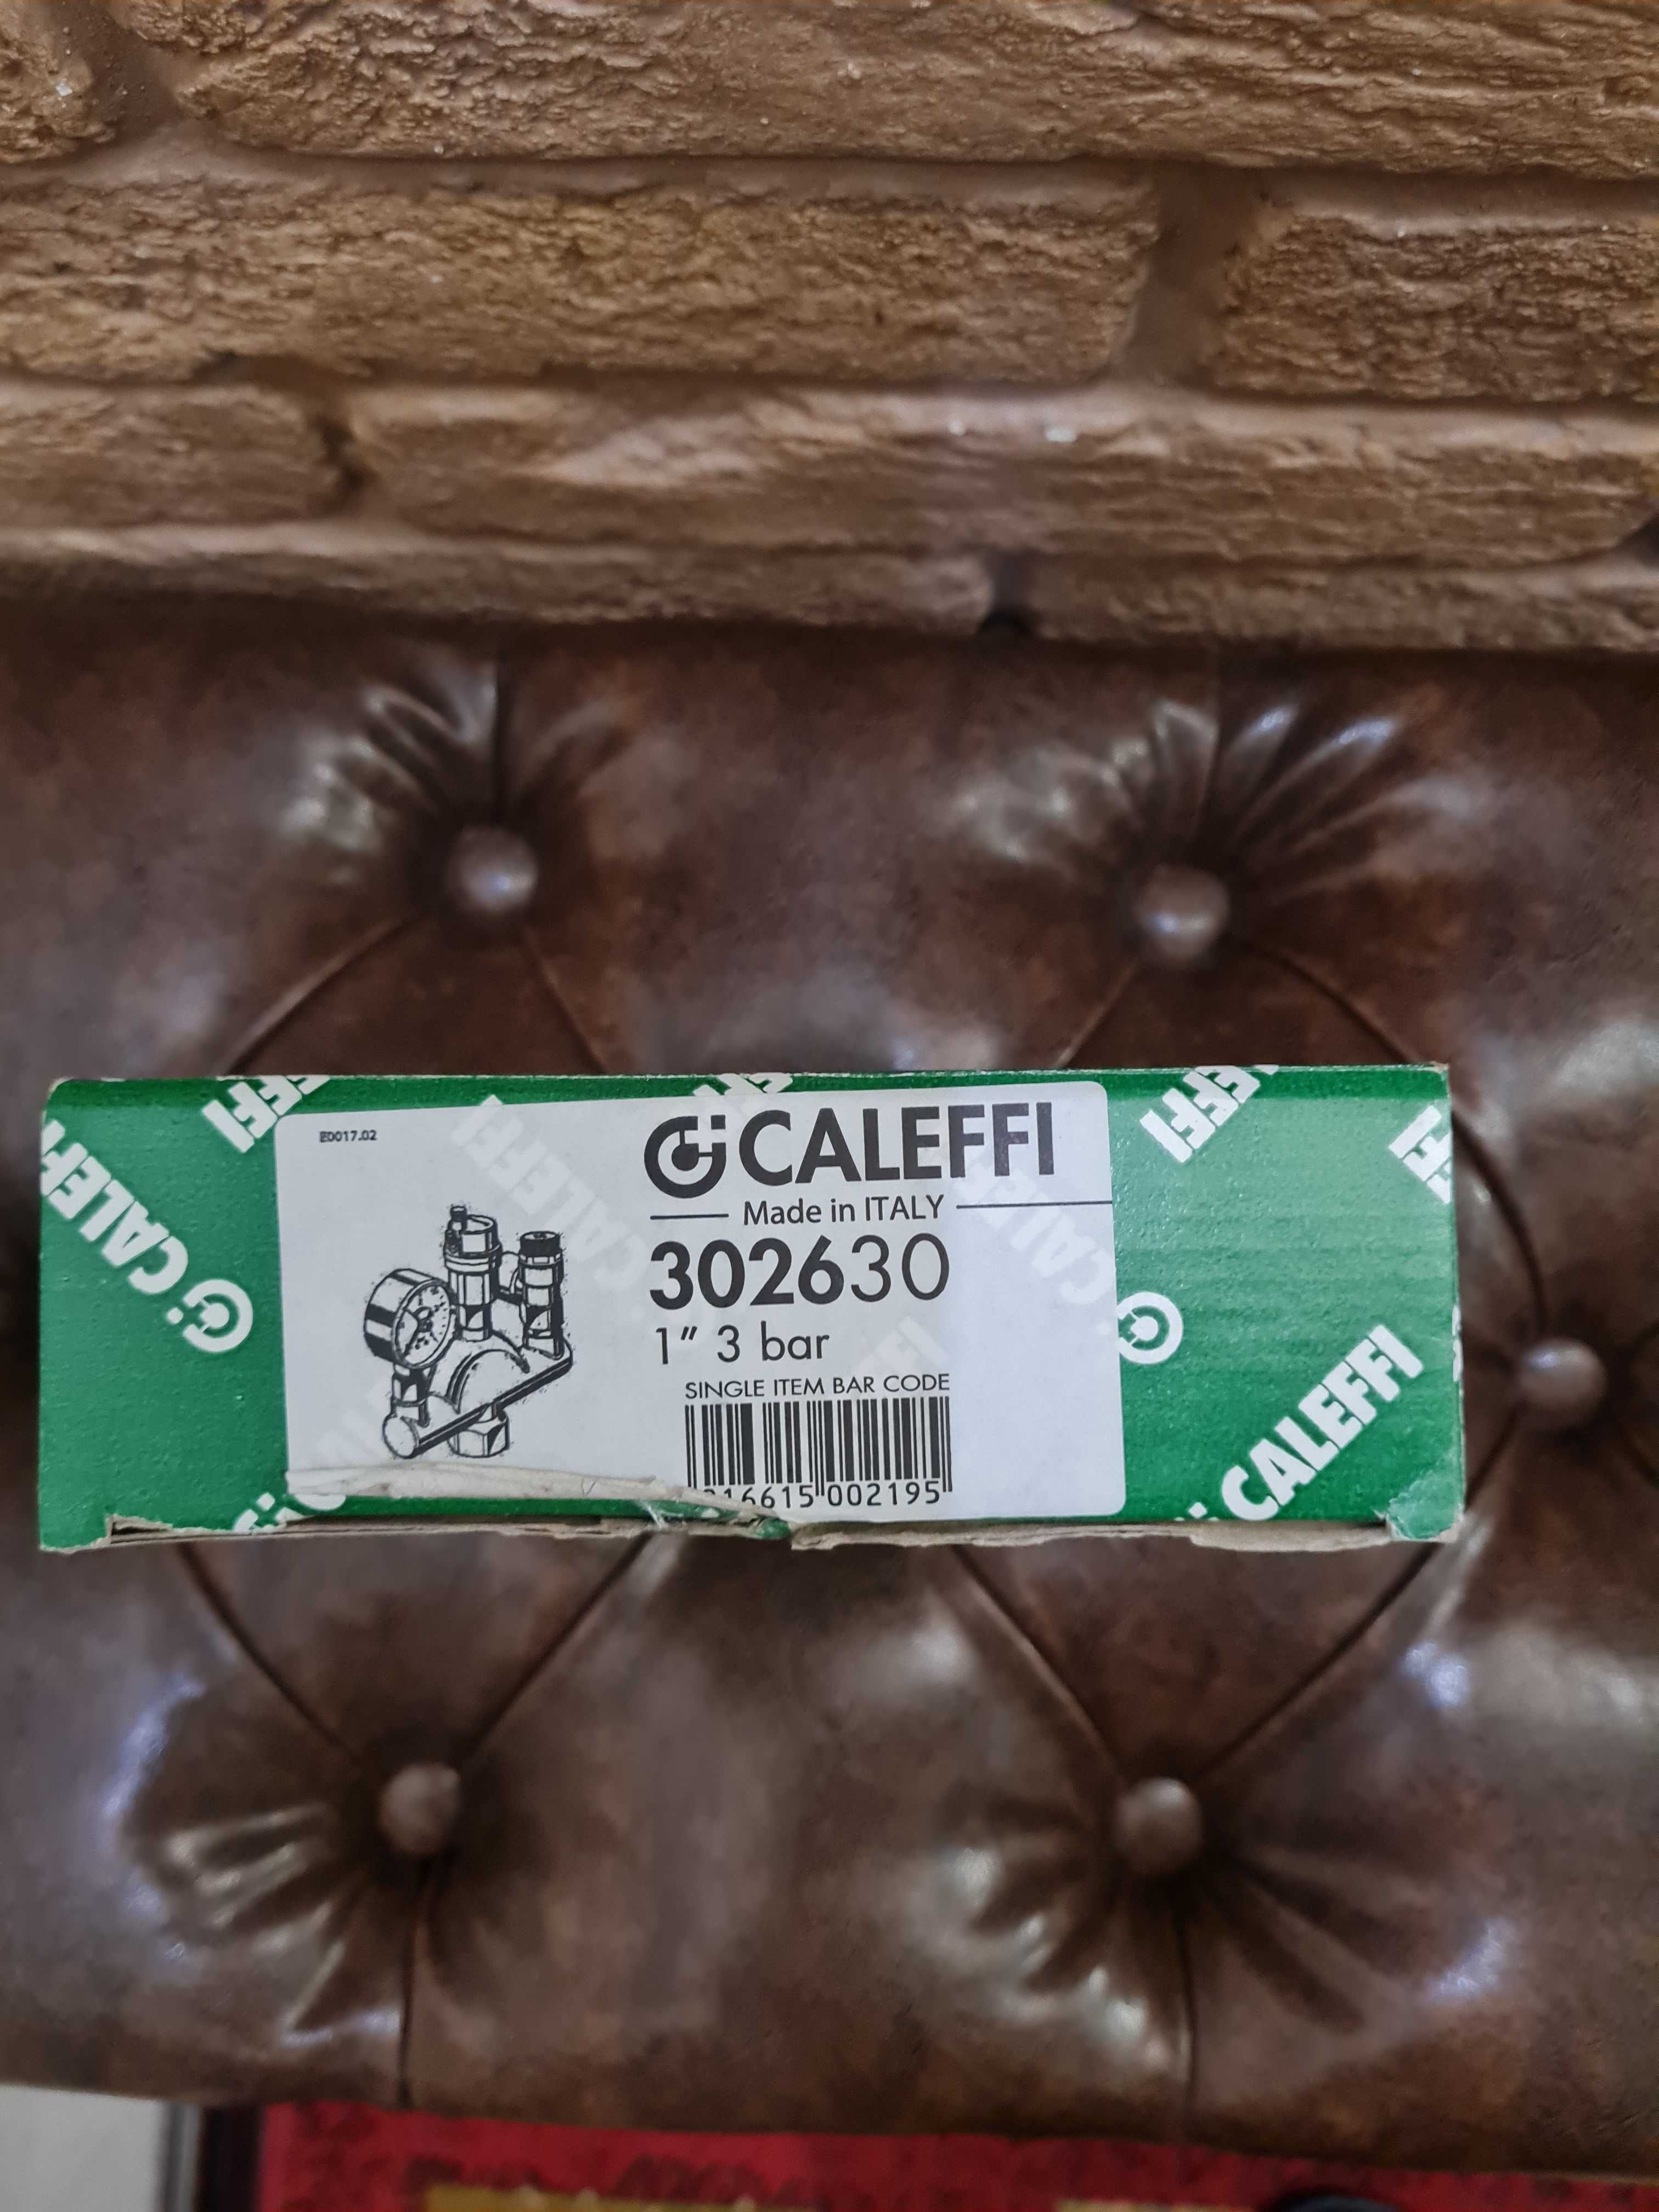 Колектор групи безпеки котла Caleffi 1* 3bar 302630